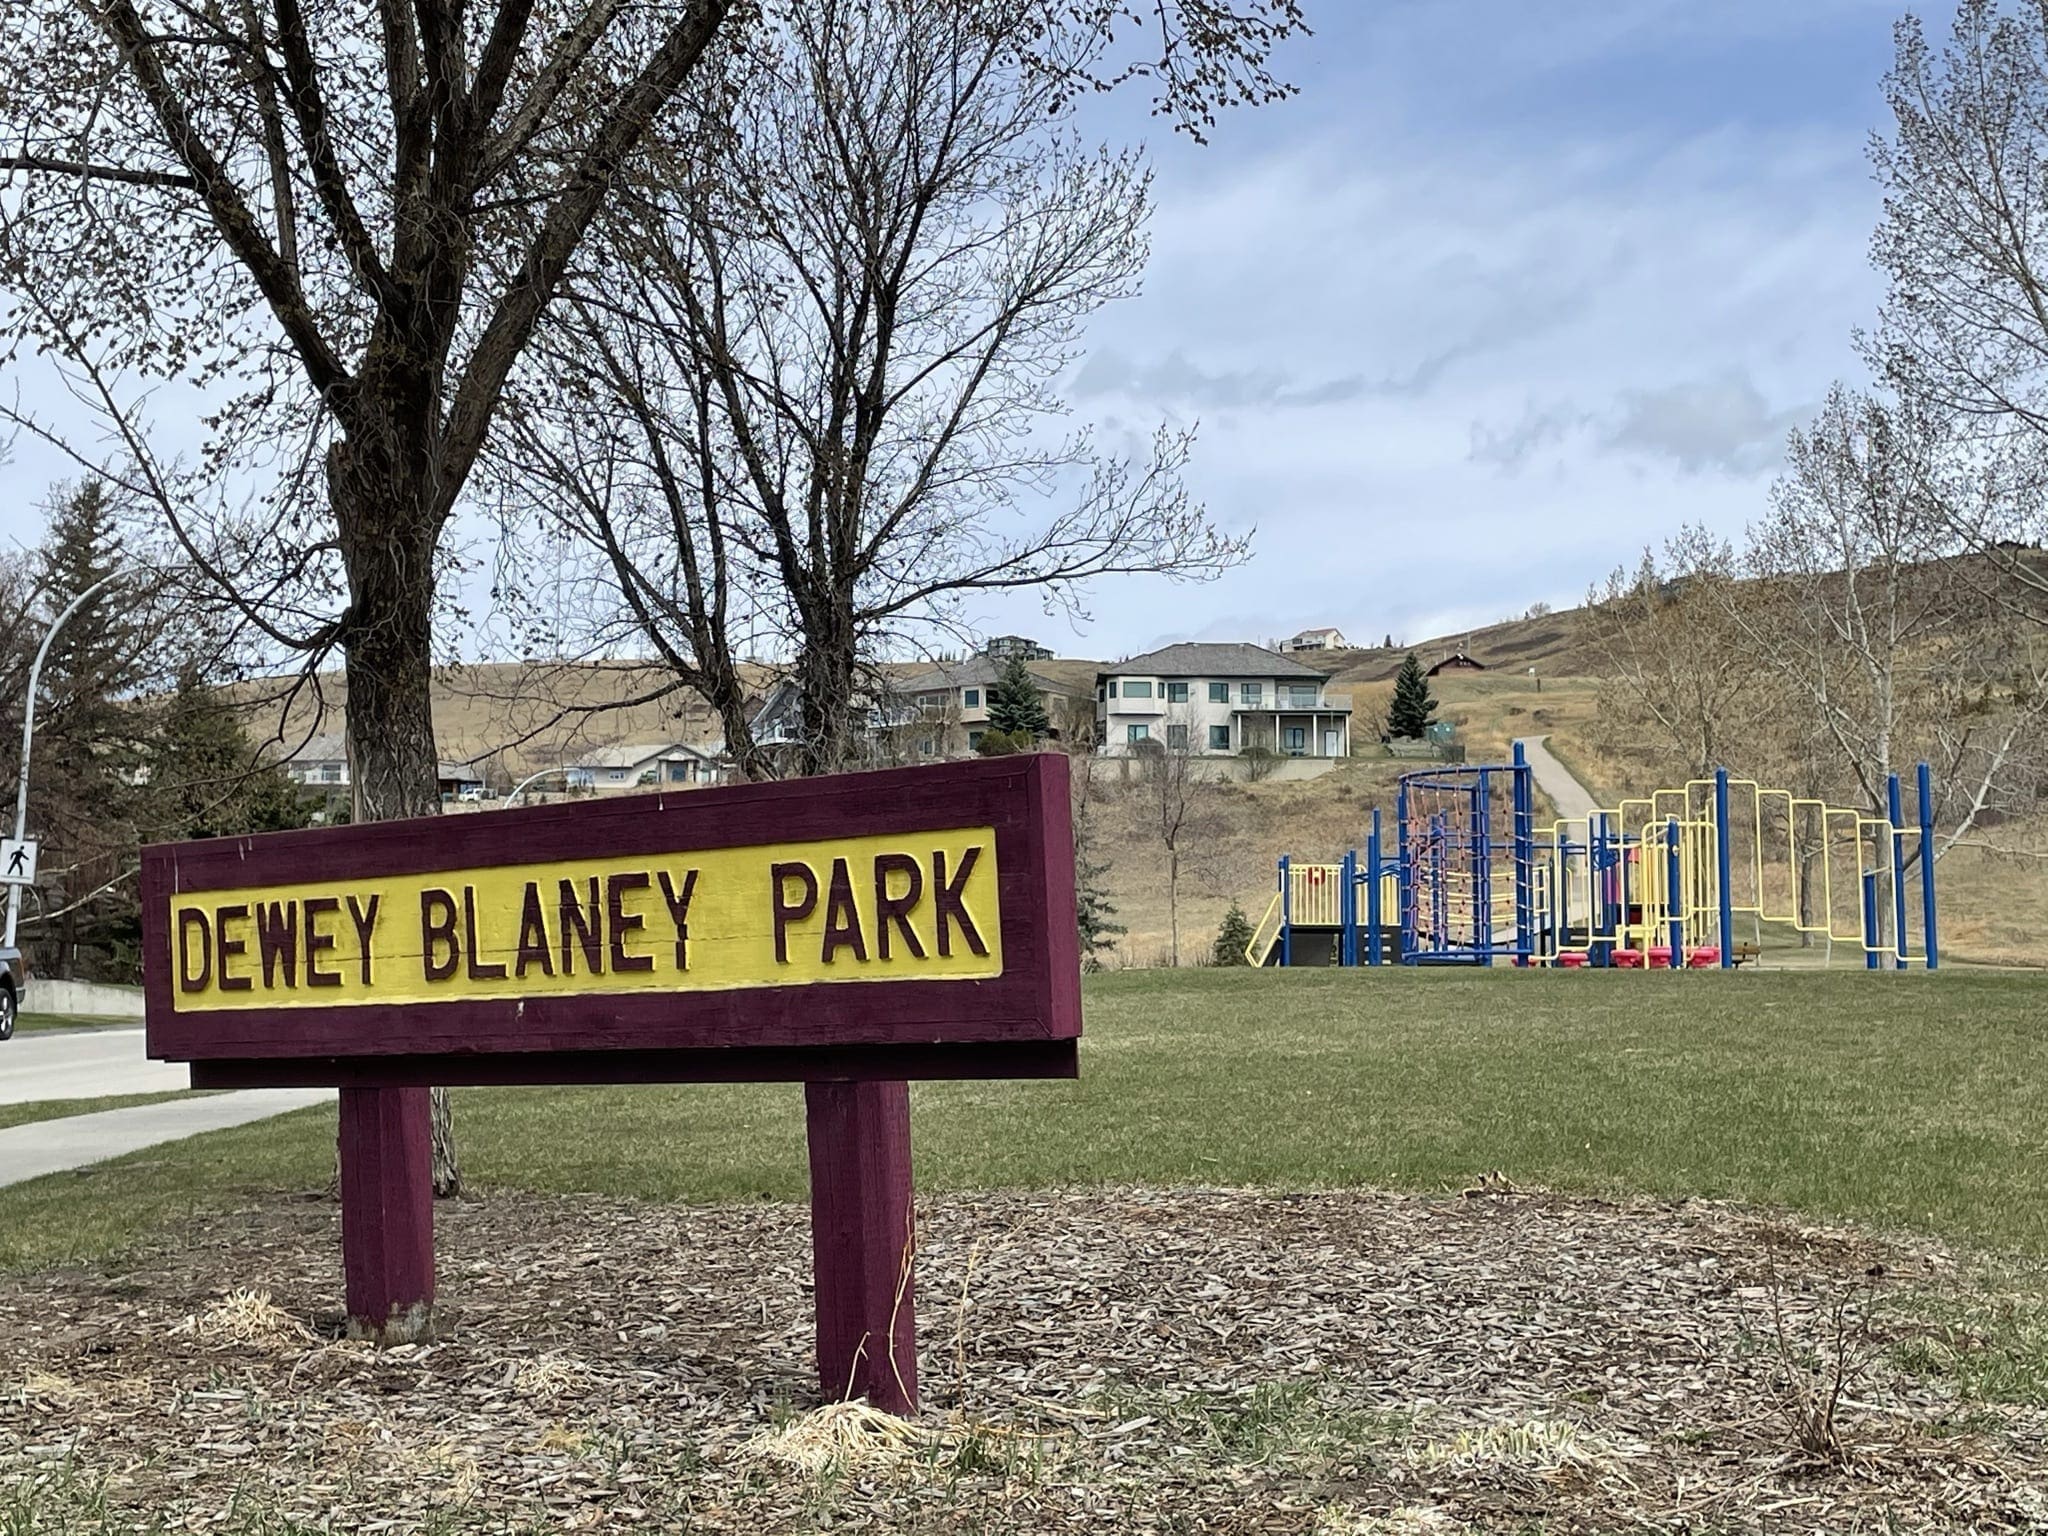 Dewey Blaney Park